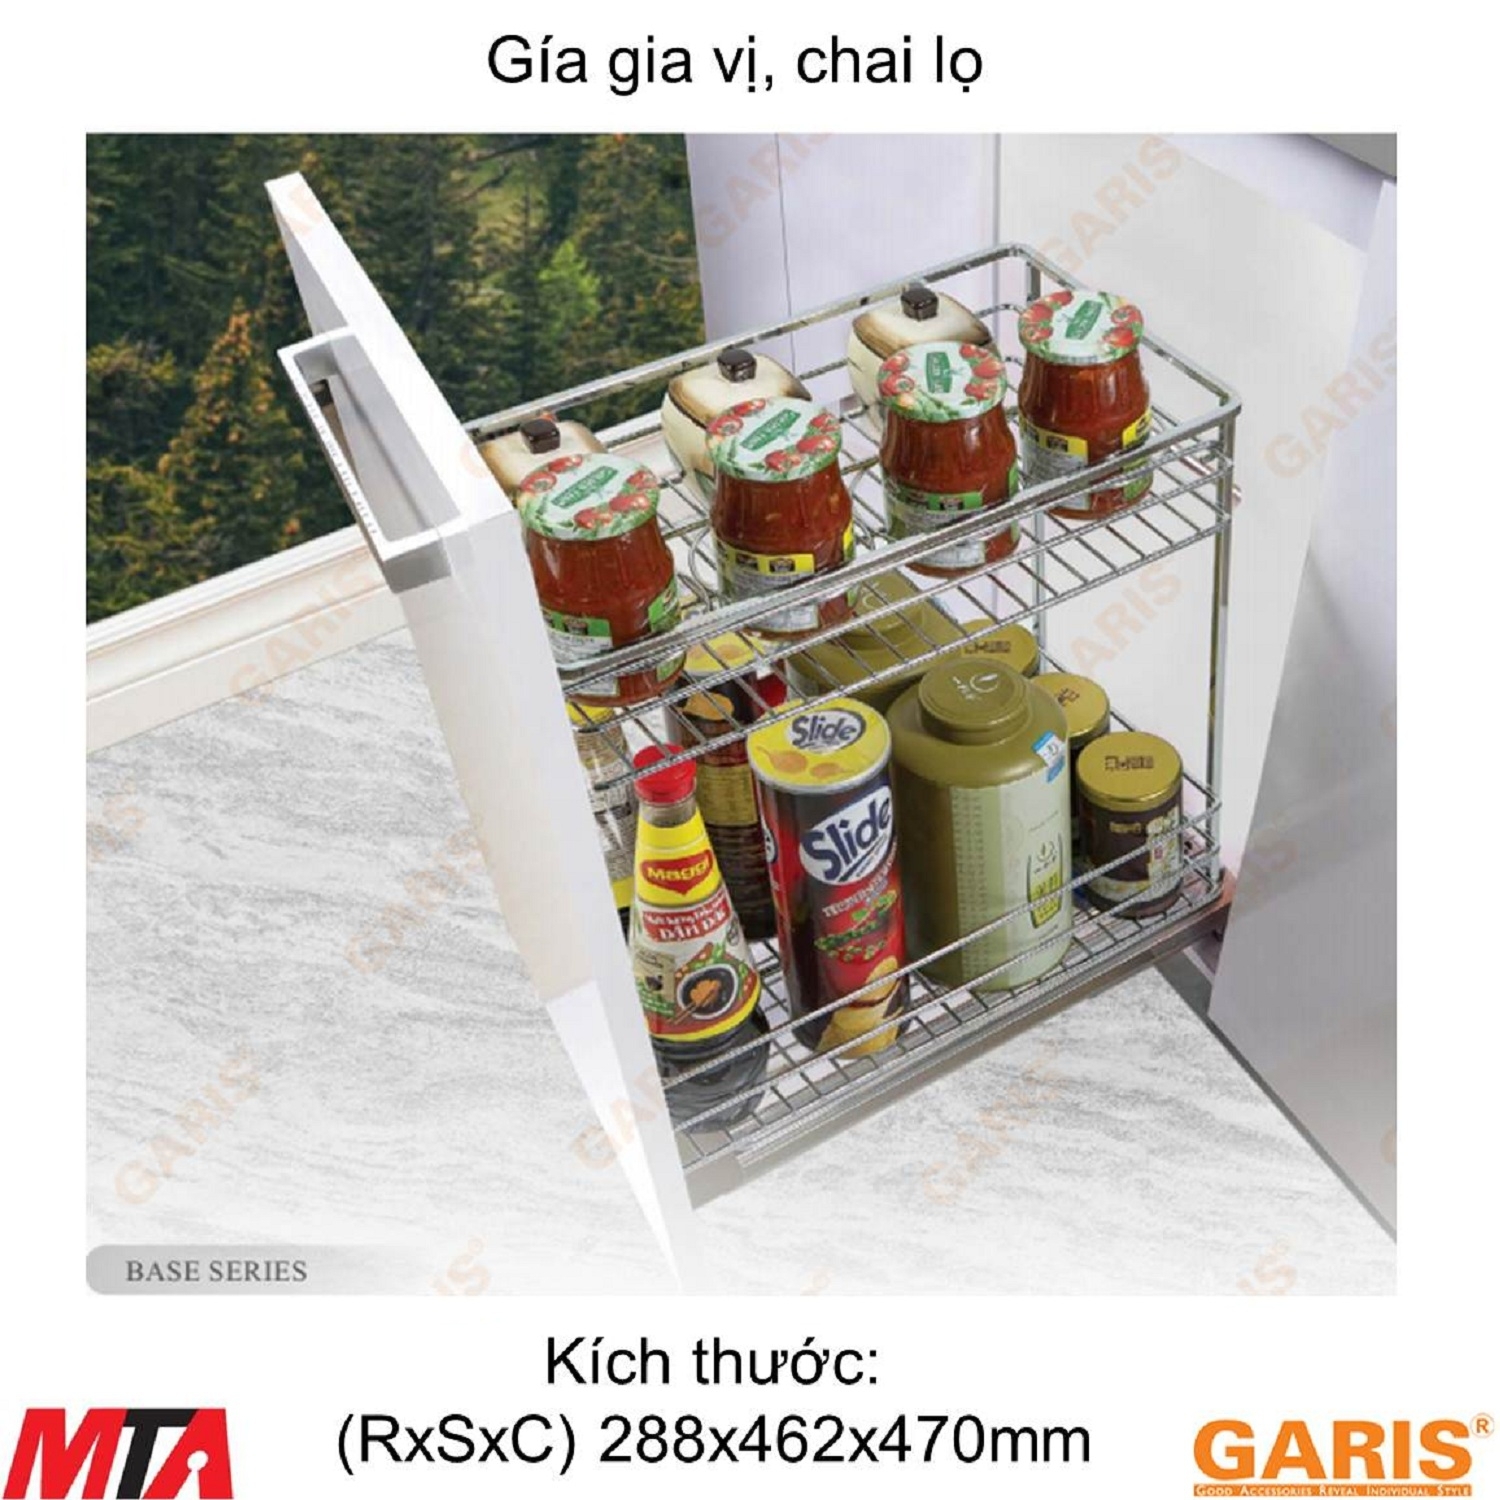 Giá gia vị chai lọ Garis GK02.35E